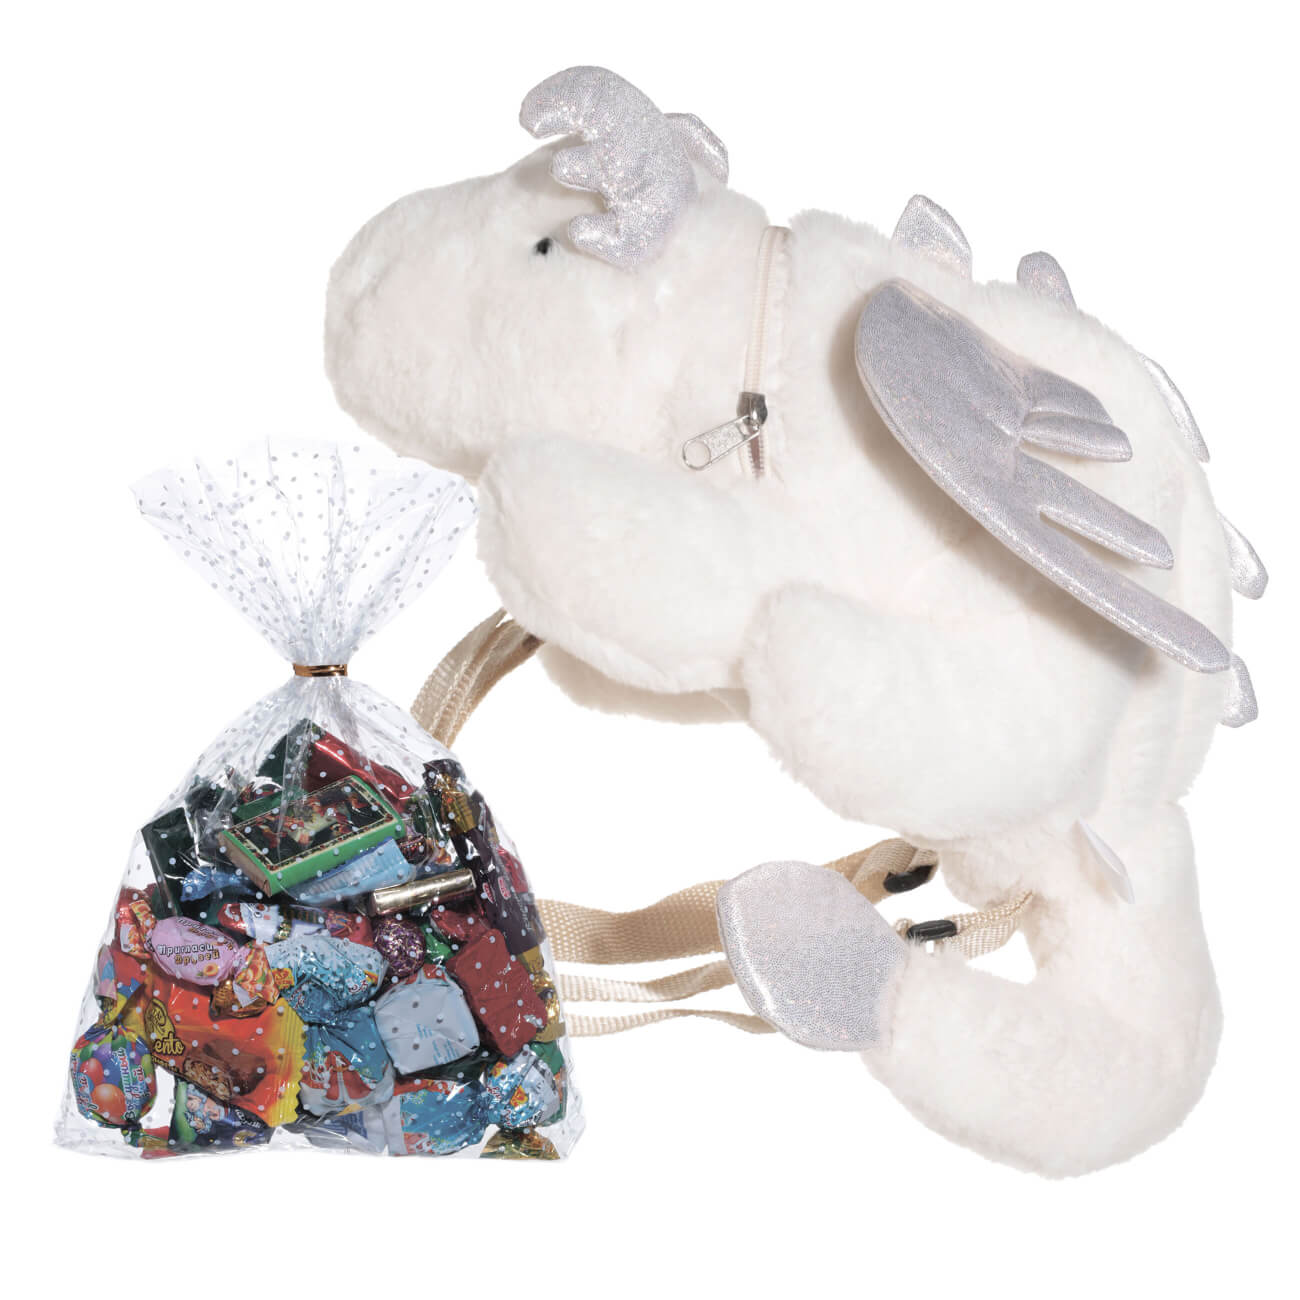 Рюкзак с конфетами, 40х26 см, 500 гр, бежевый, Ассорти, Дракон, Dragon toy